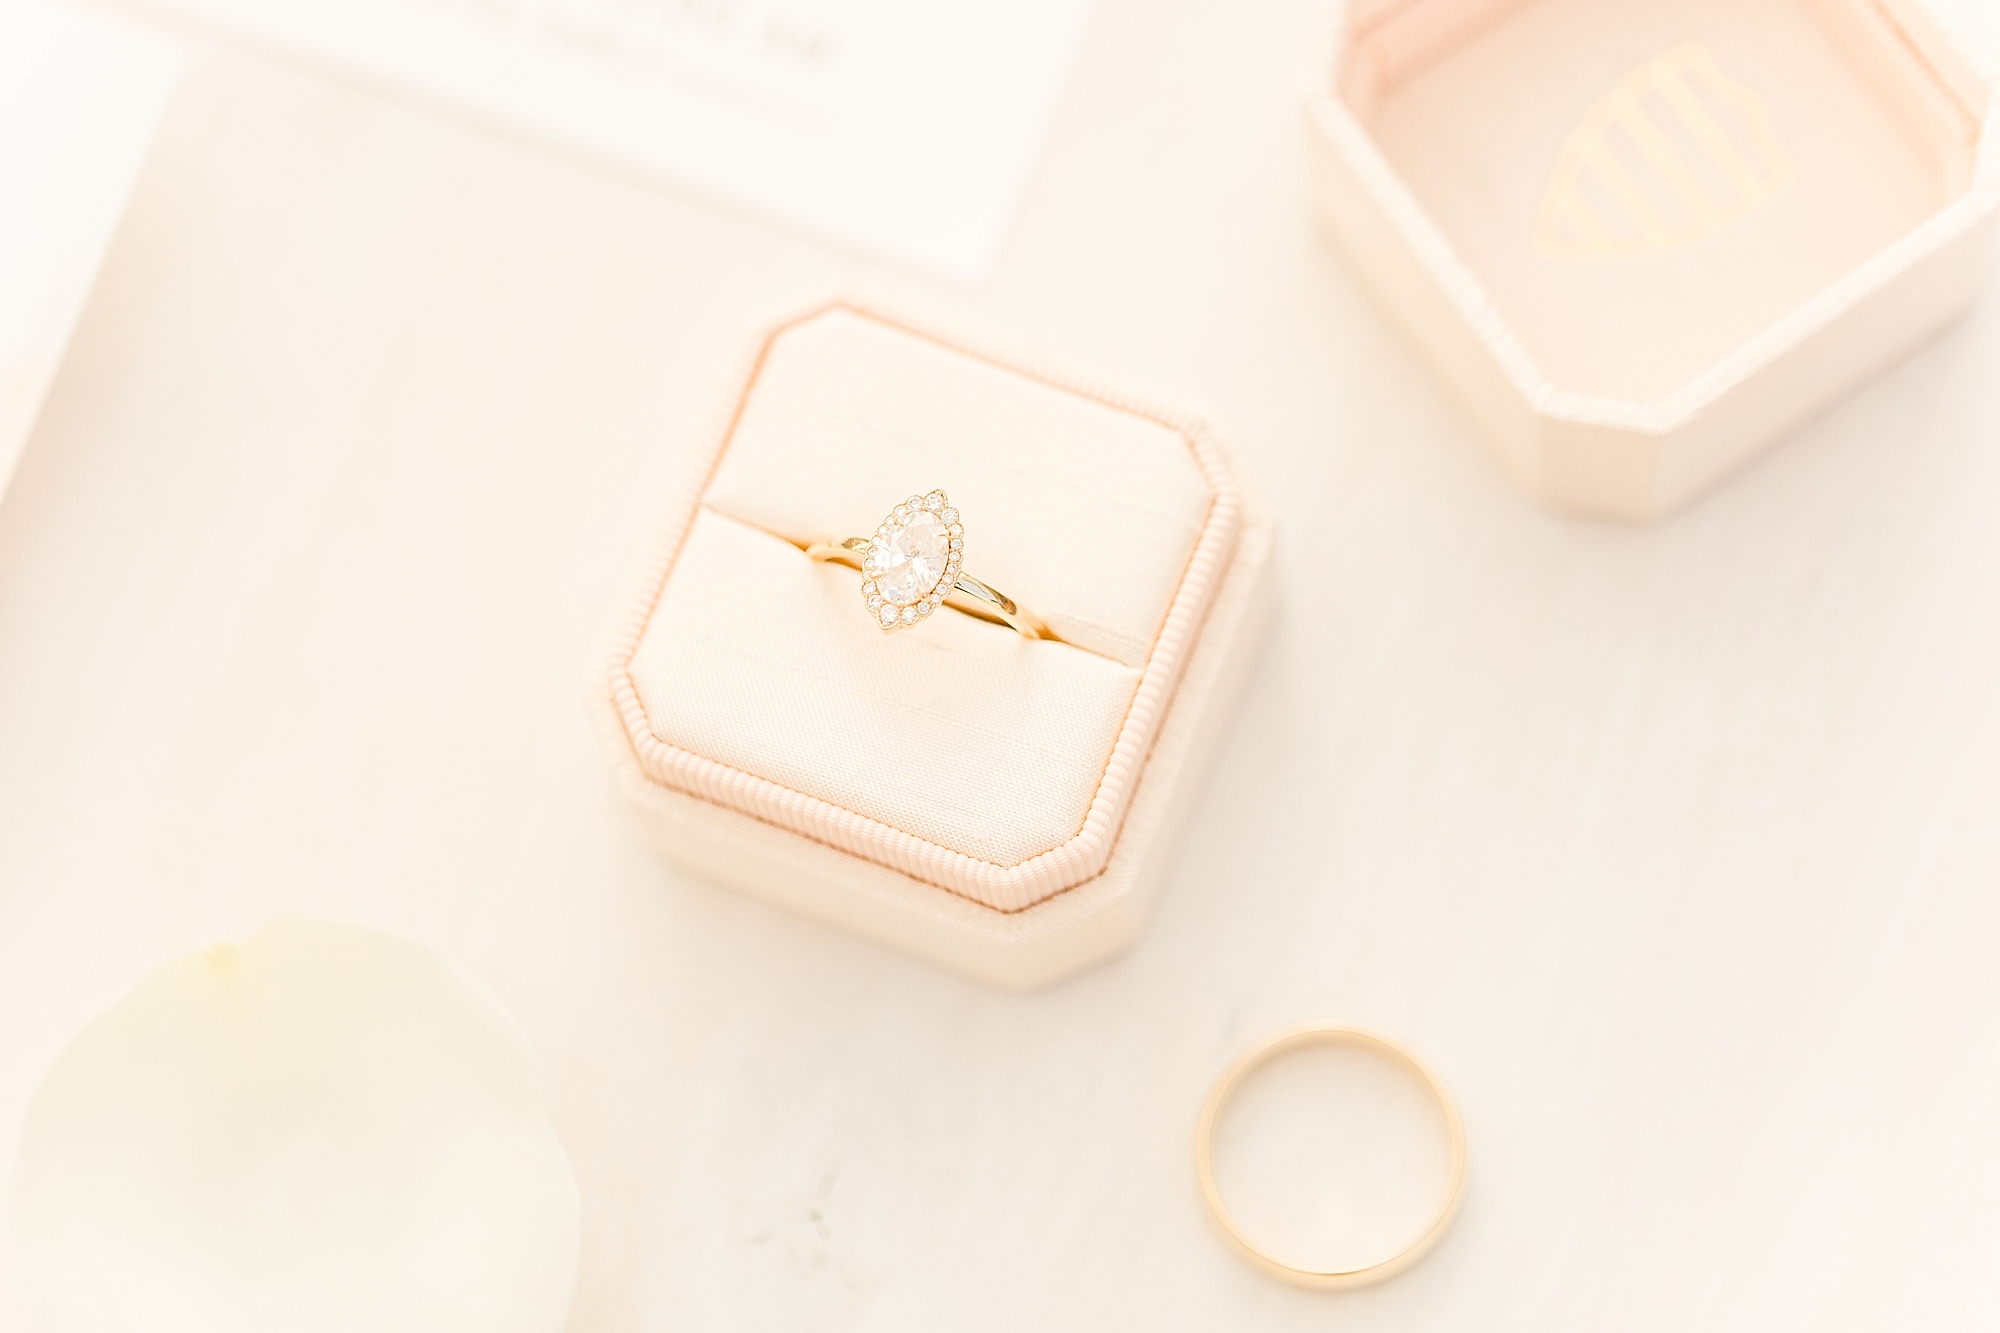 Custom wedding rings and ring box